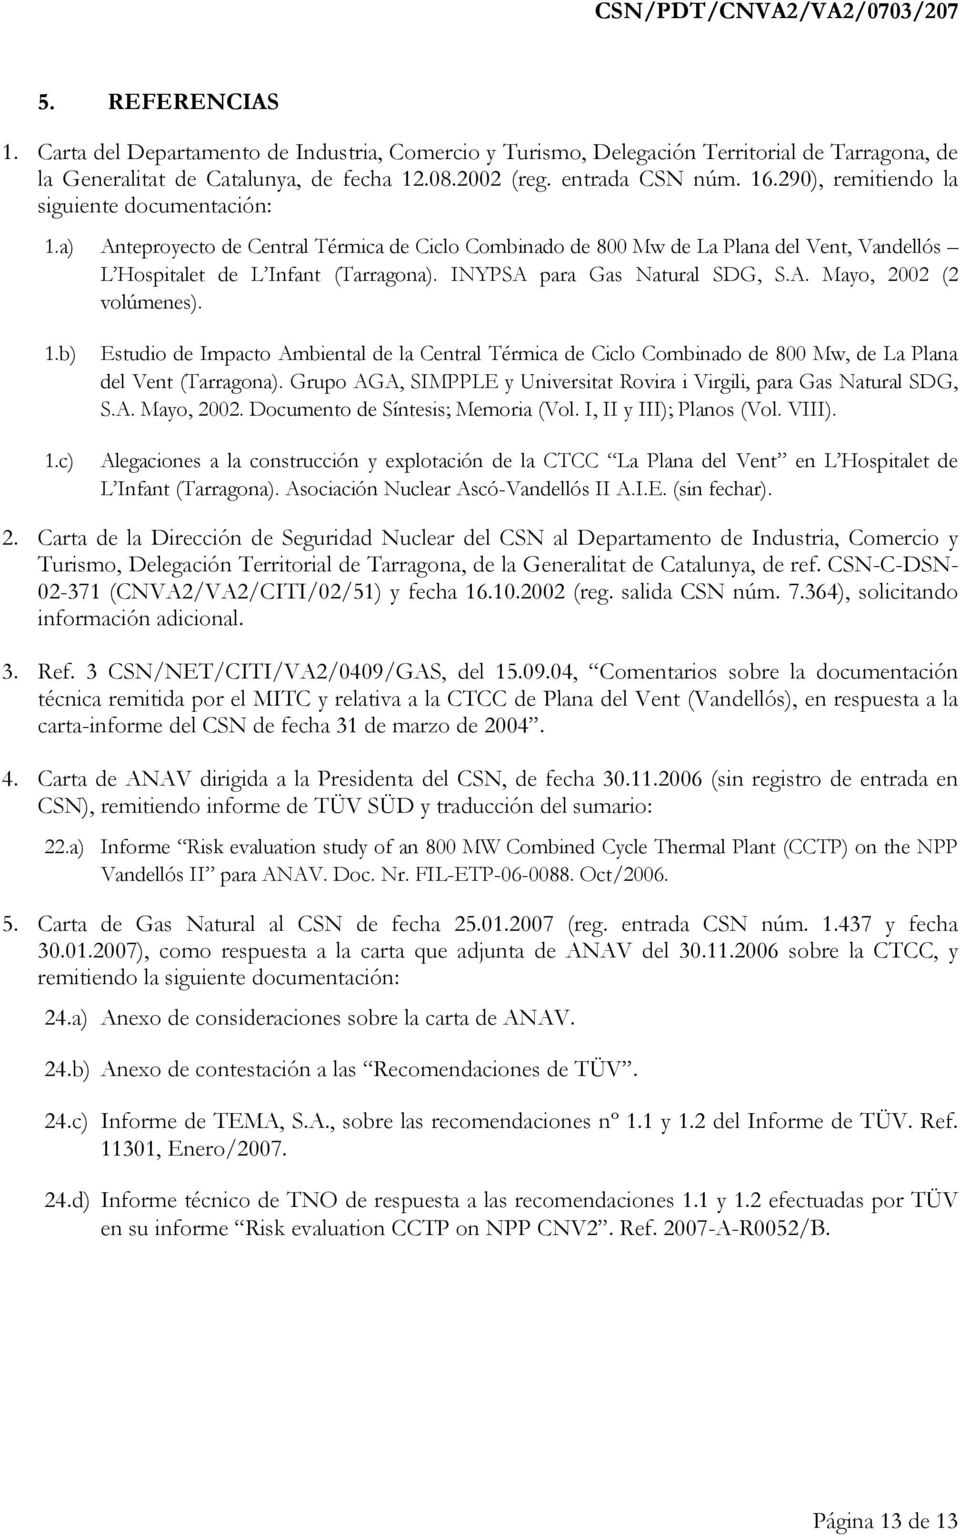 INYPSA para Gas Natural SDG, S.A. Mayo, 2002 (2 volúmenes). 1.b) 1.c) Estudio de Impacto Ambiental de la Central Térmica de Ciclo Combinado de 800 Mw, de La Plana del Vent (Tarragona).